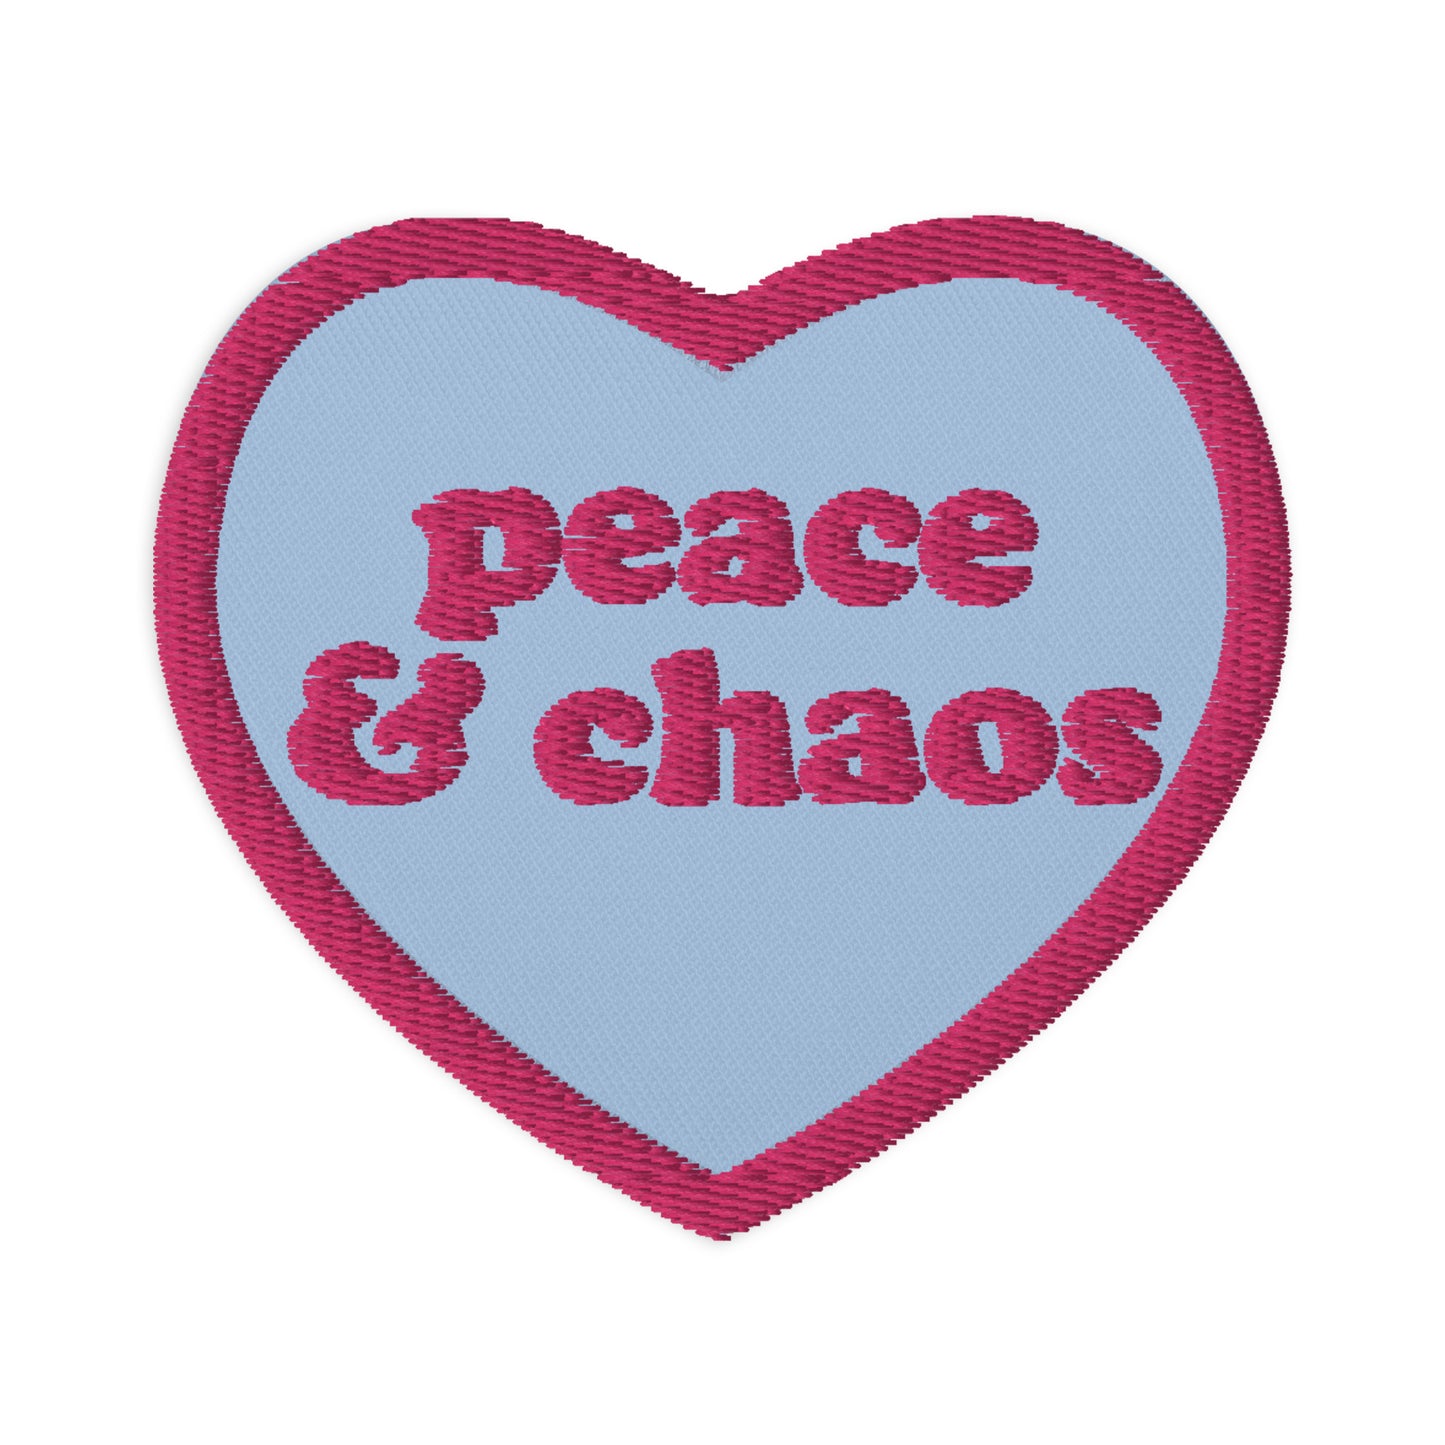 PEACE & CHAOS PATCH